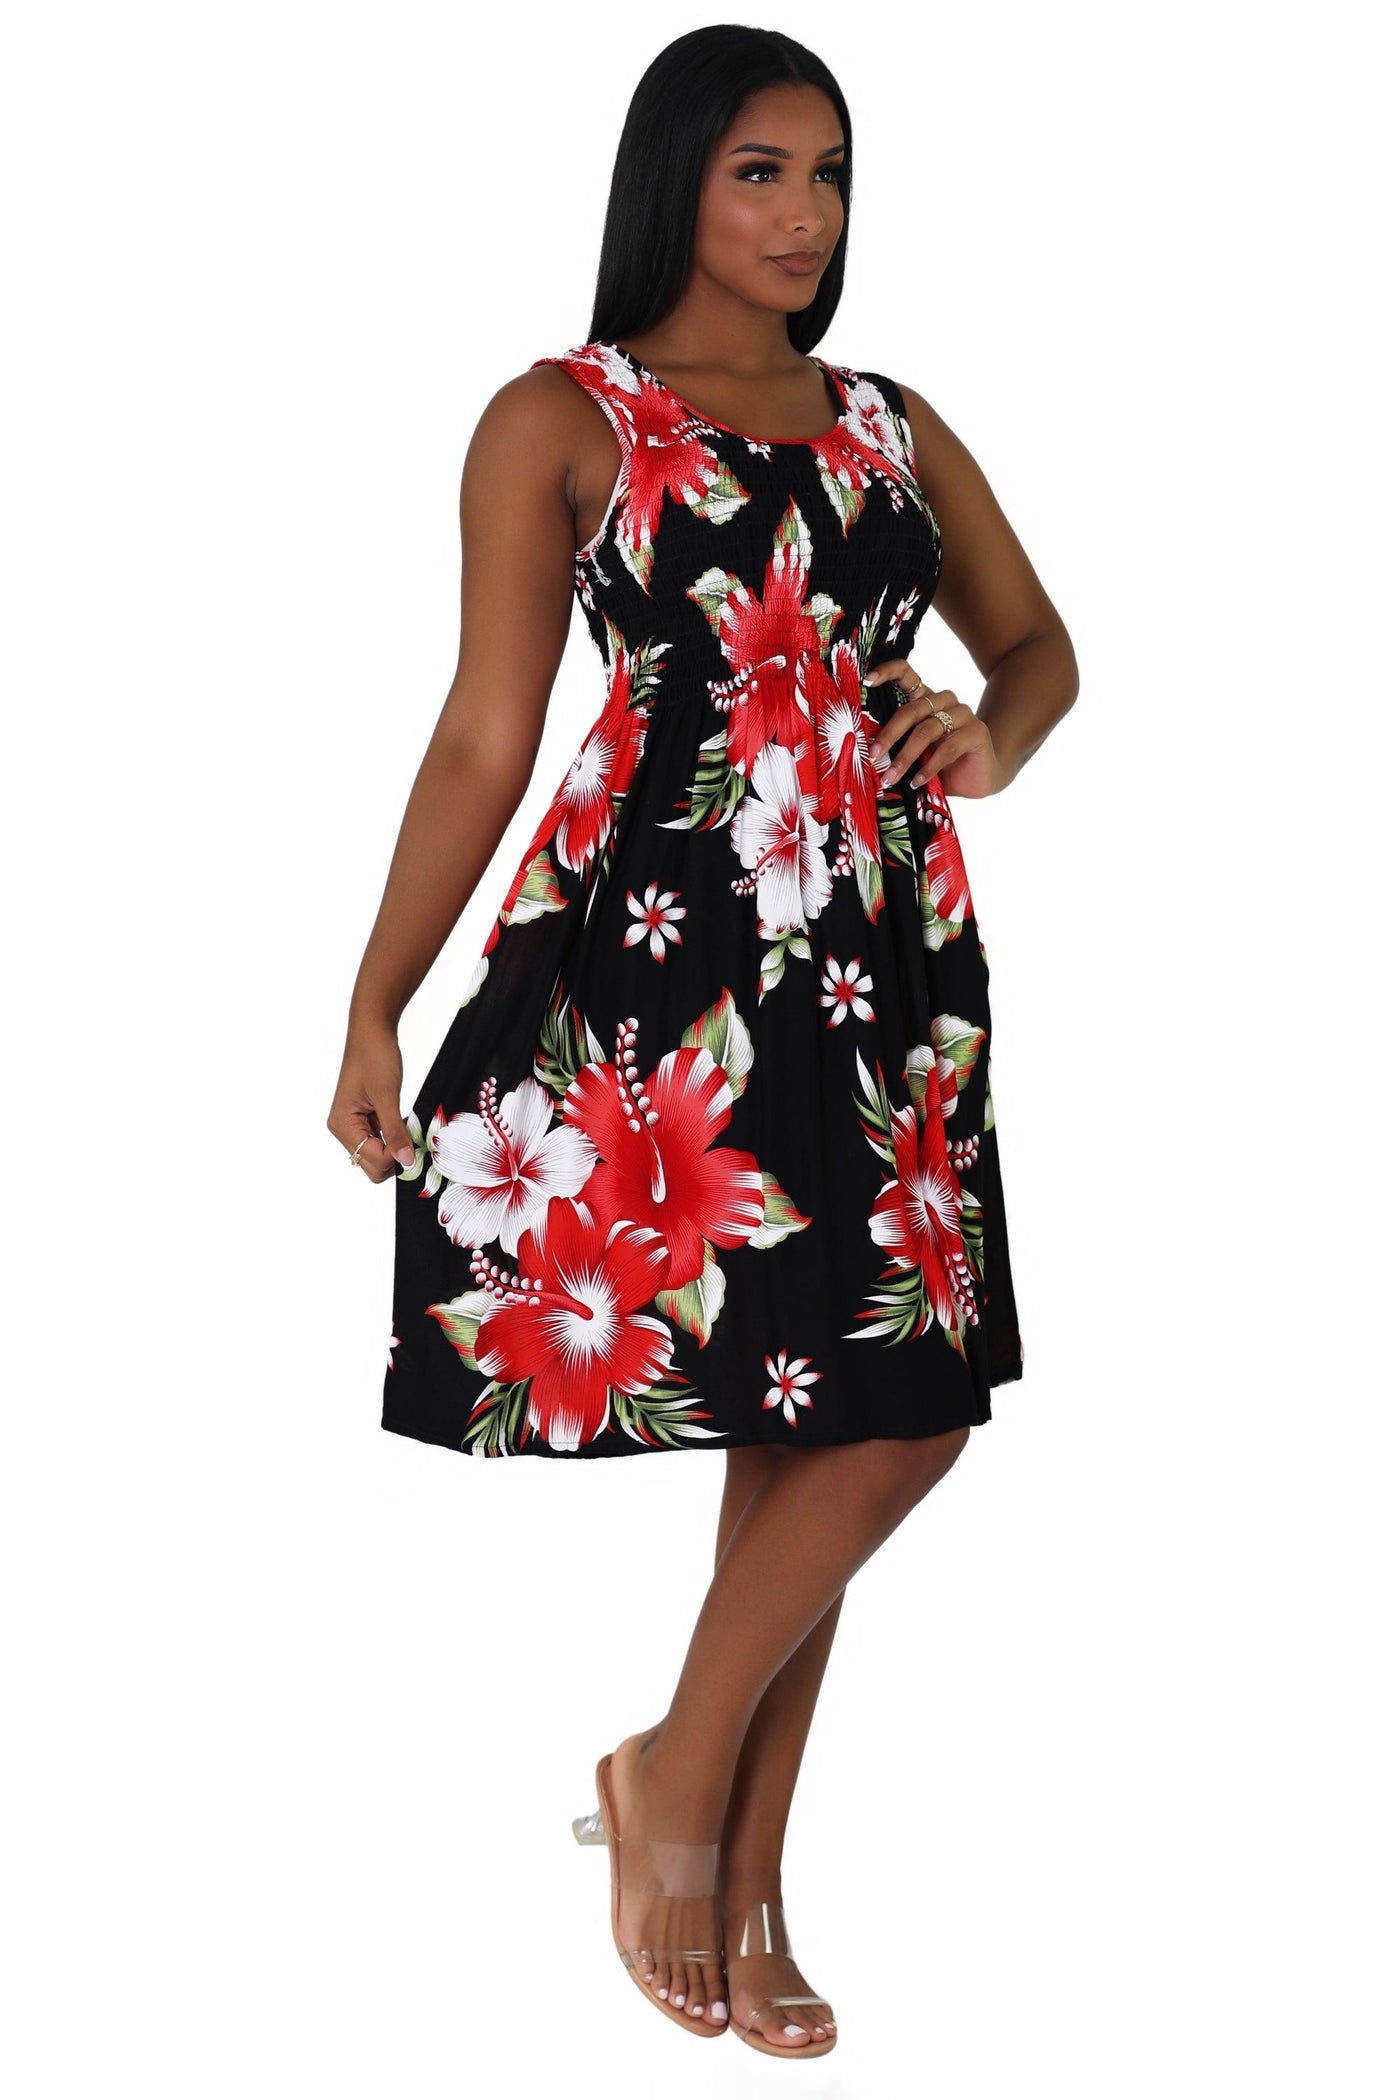 Floral Print Bali Inspired House Dress TH2094  - Advance Apparels Inc